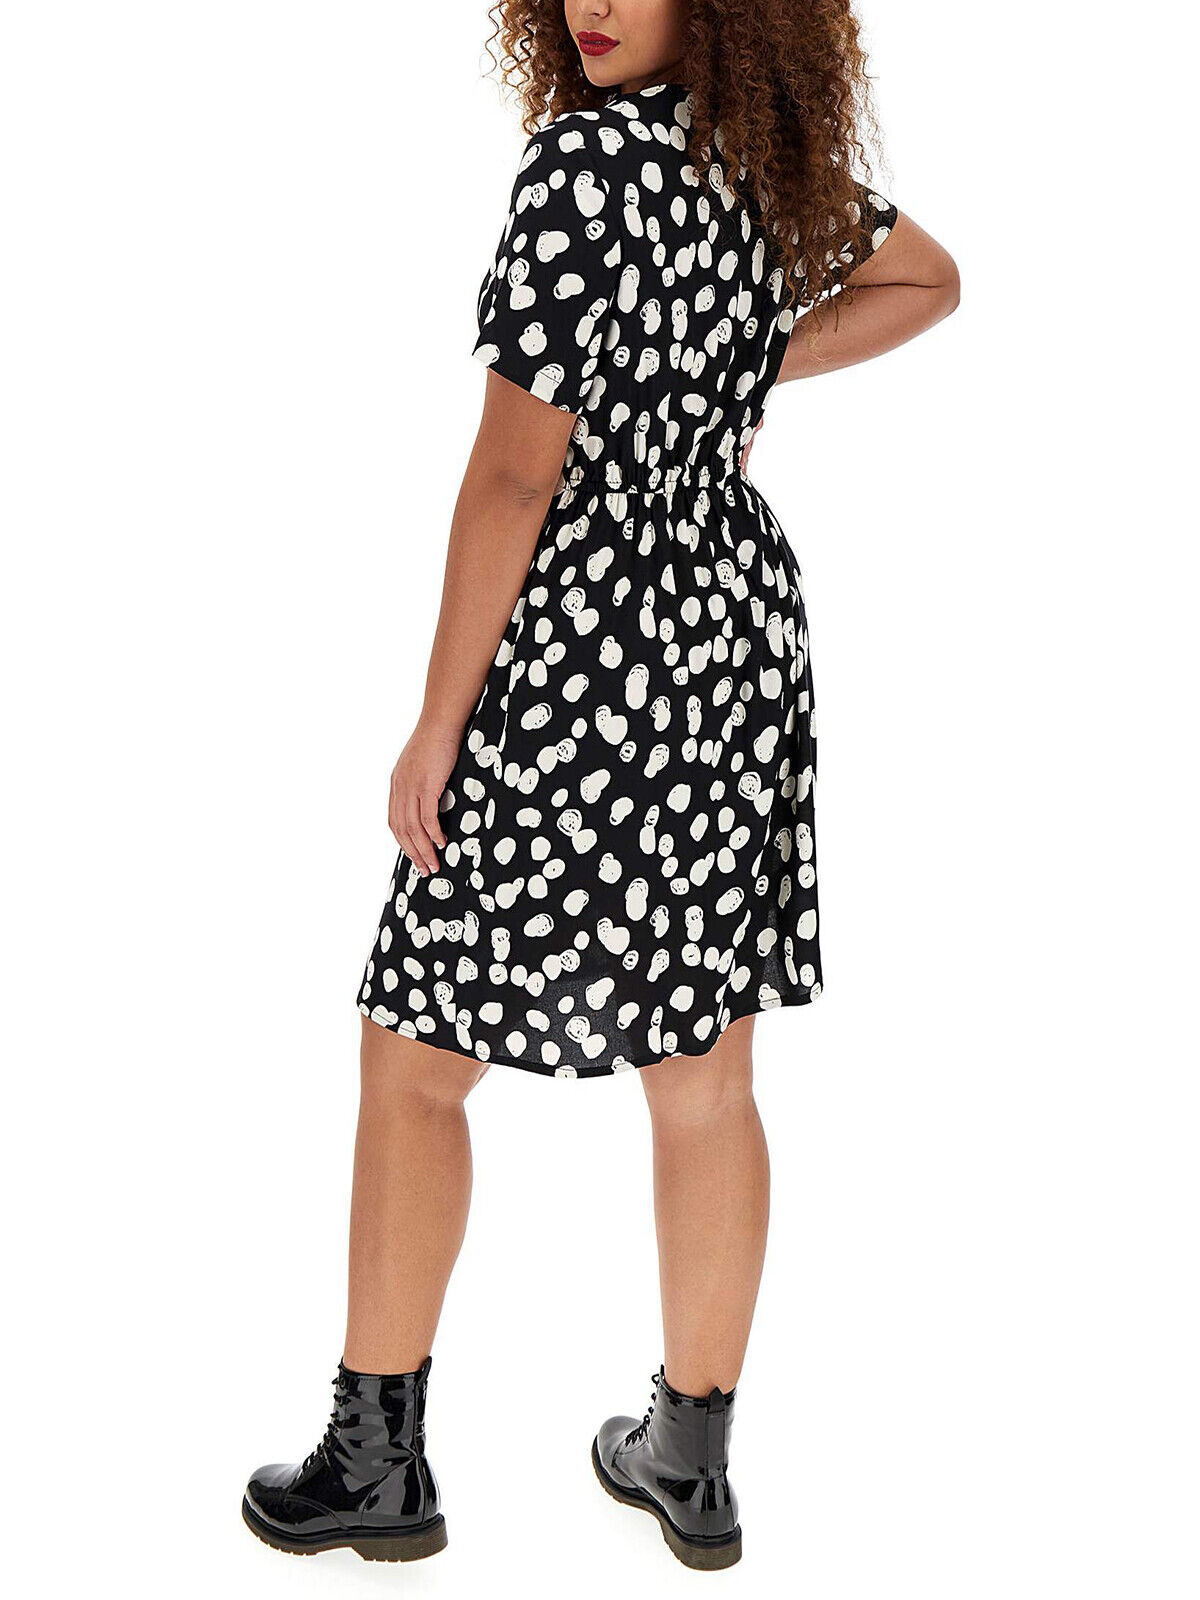 Simply Be Black Spot Print Tea Dress in Sizes 16 or 18